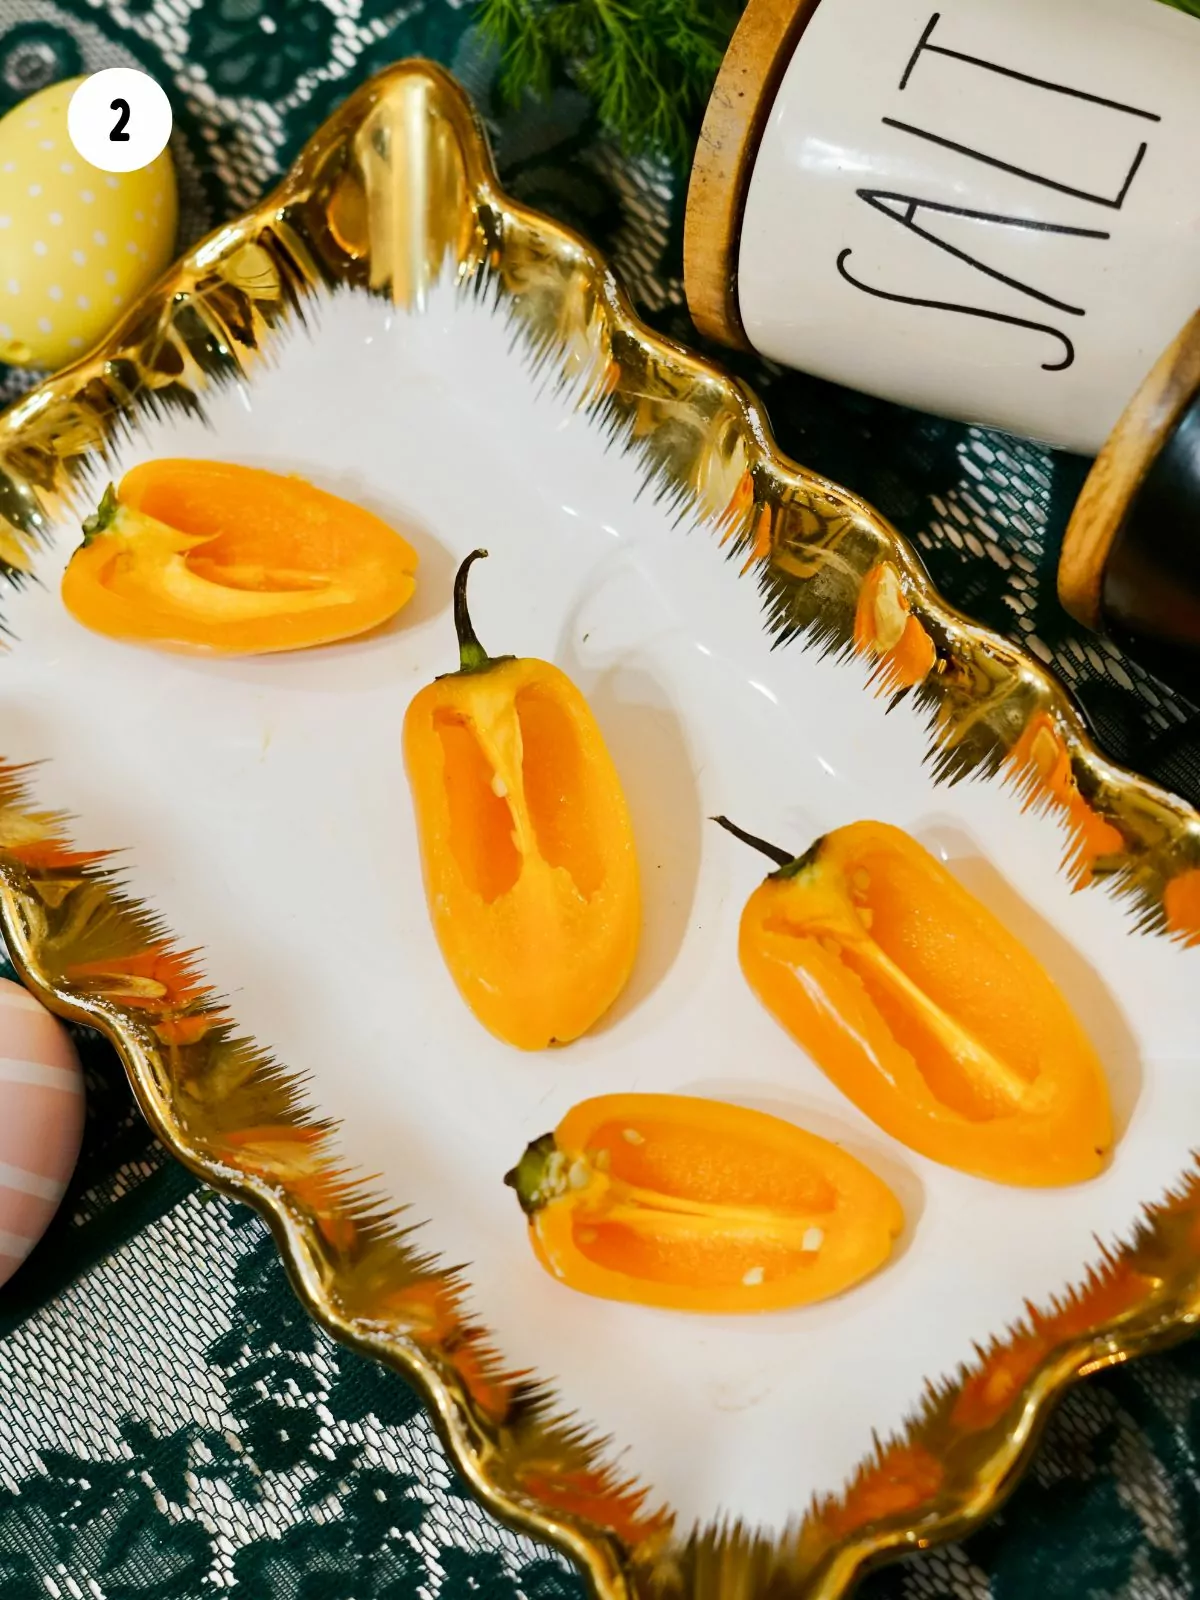 orange peppers sliced in half.